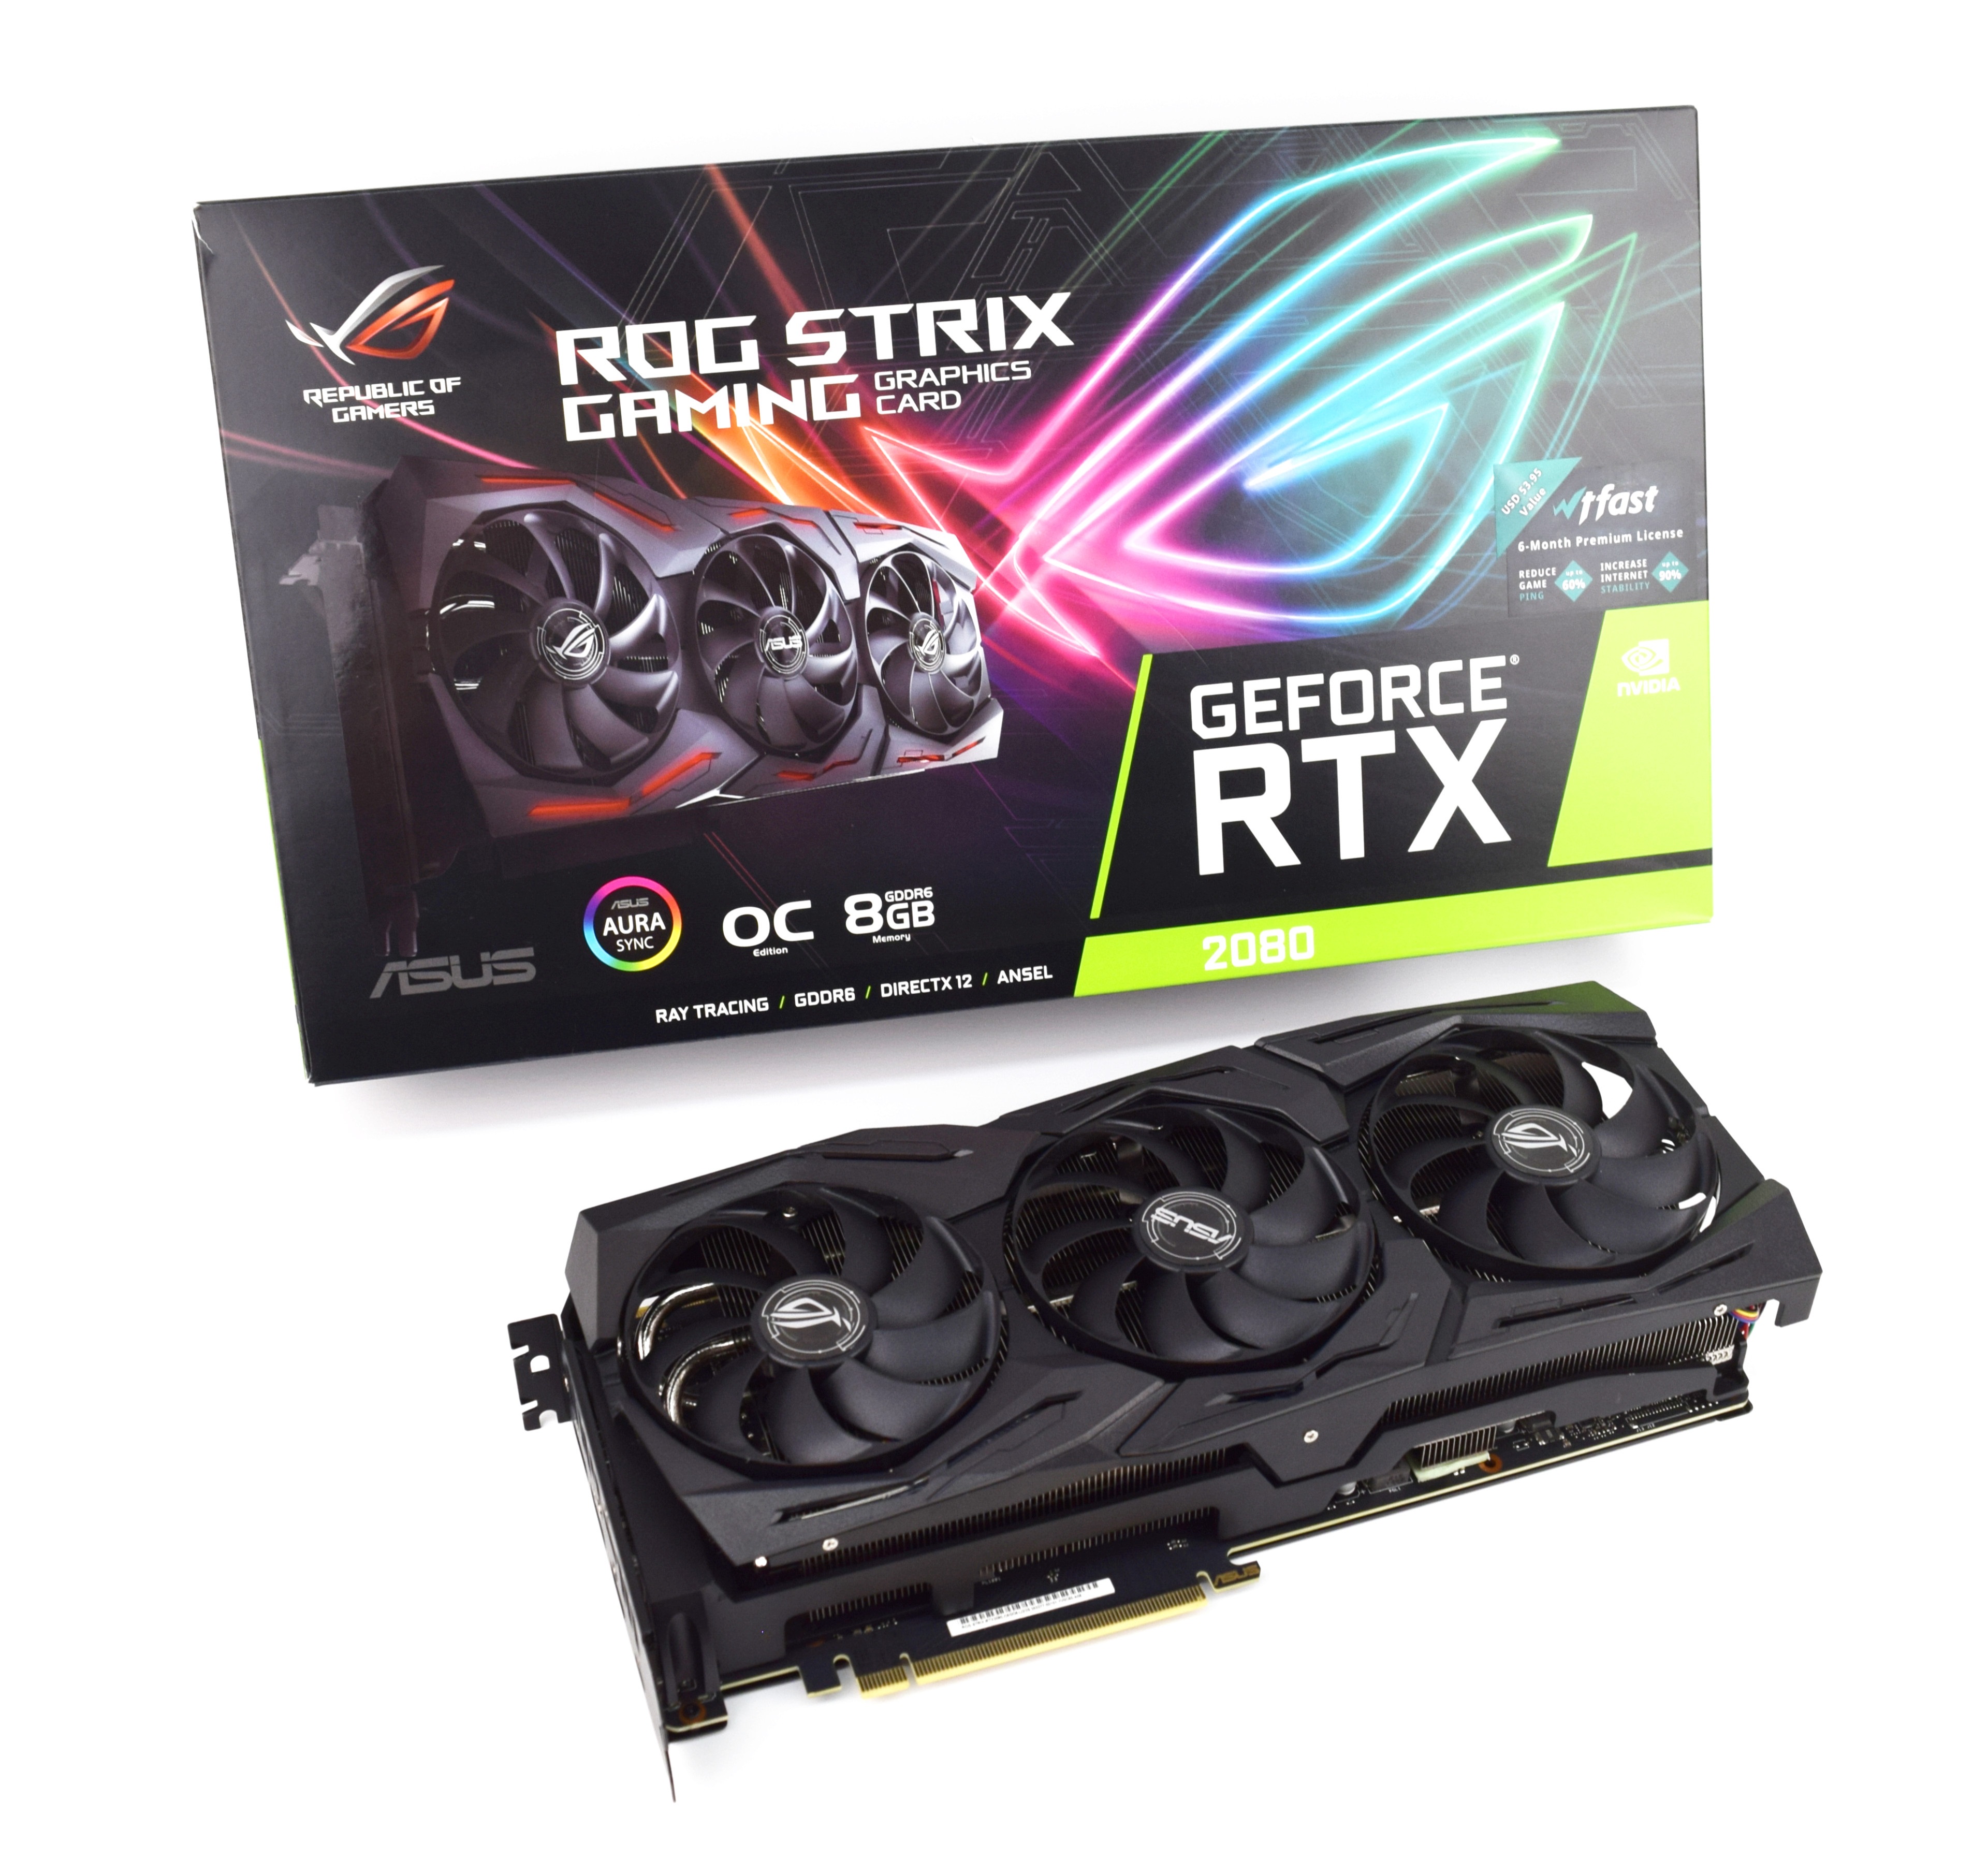 NEU ASUS ROG Strix GeForce RTX 2080 Ti OC Gaming Grafikkarte Nvidia 11GB GDDR6 